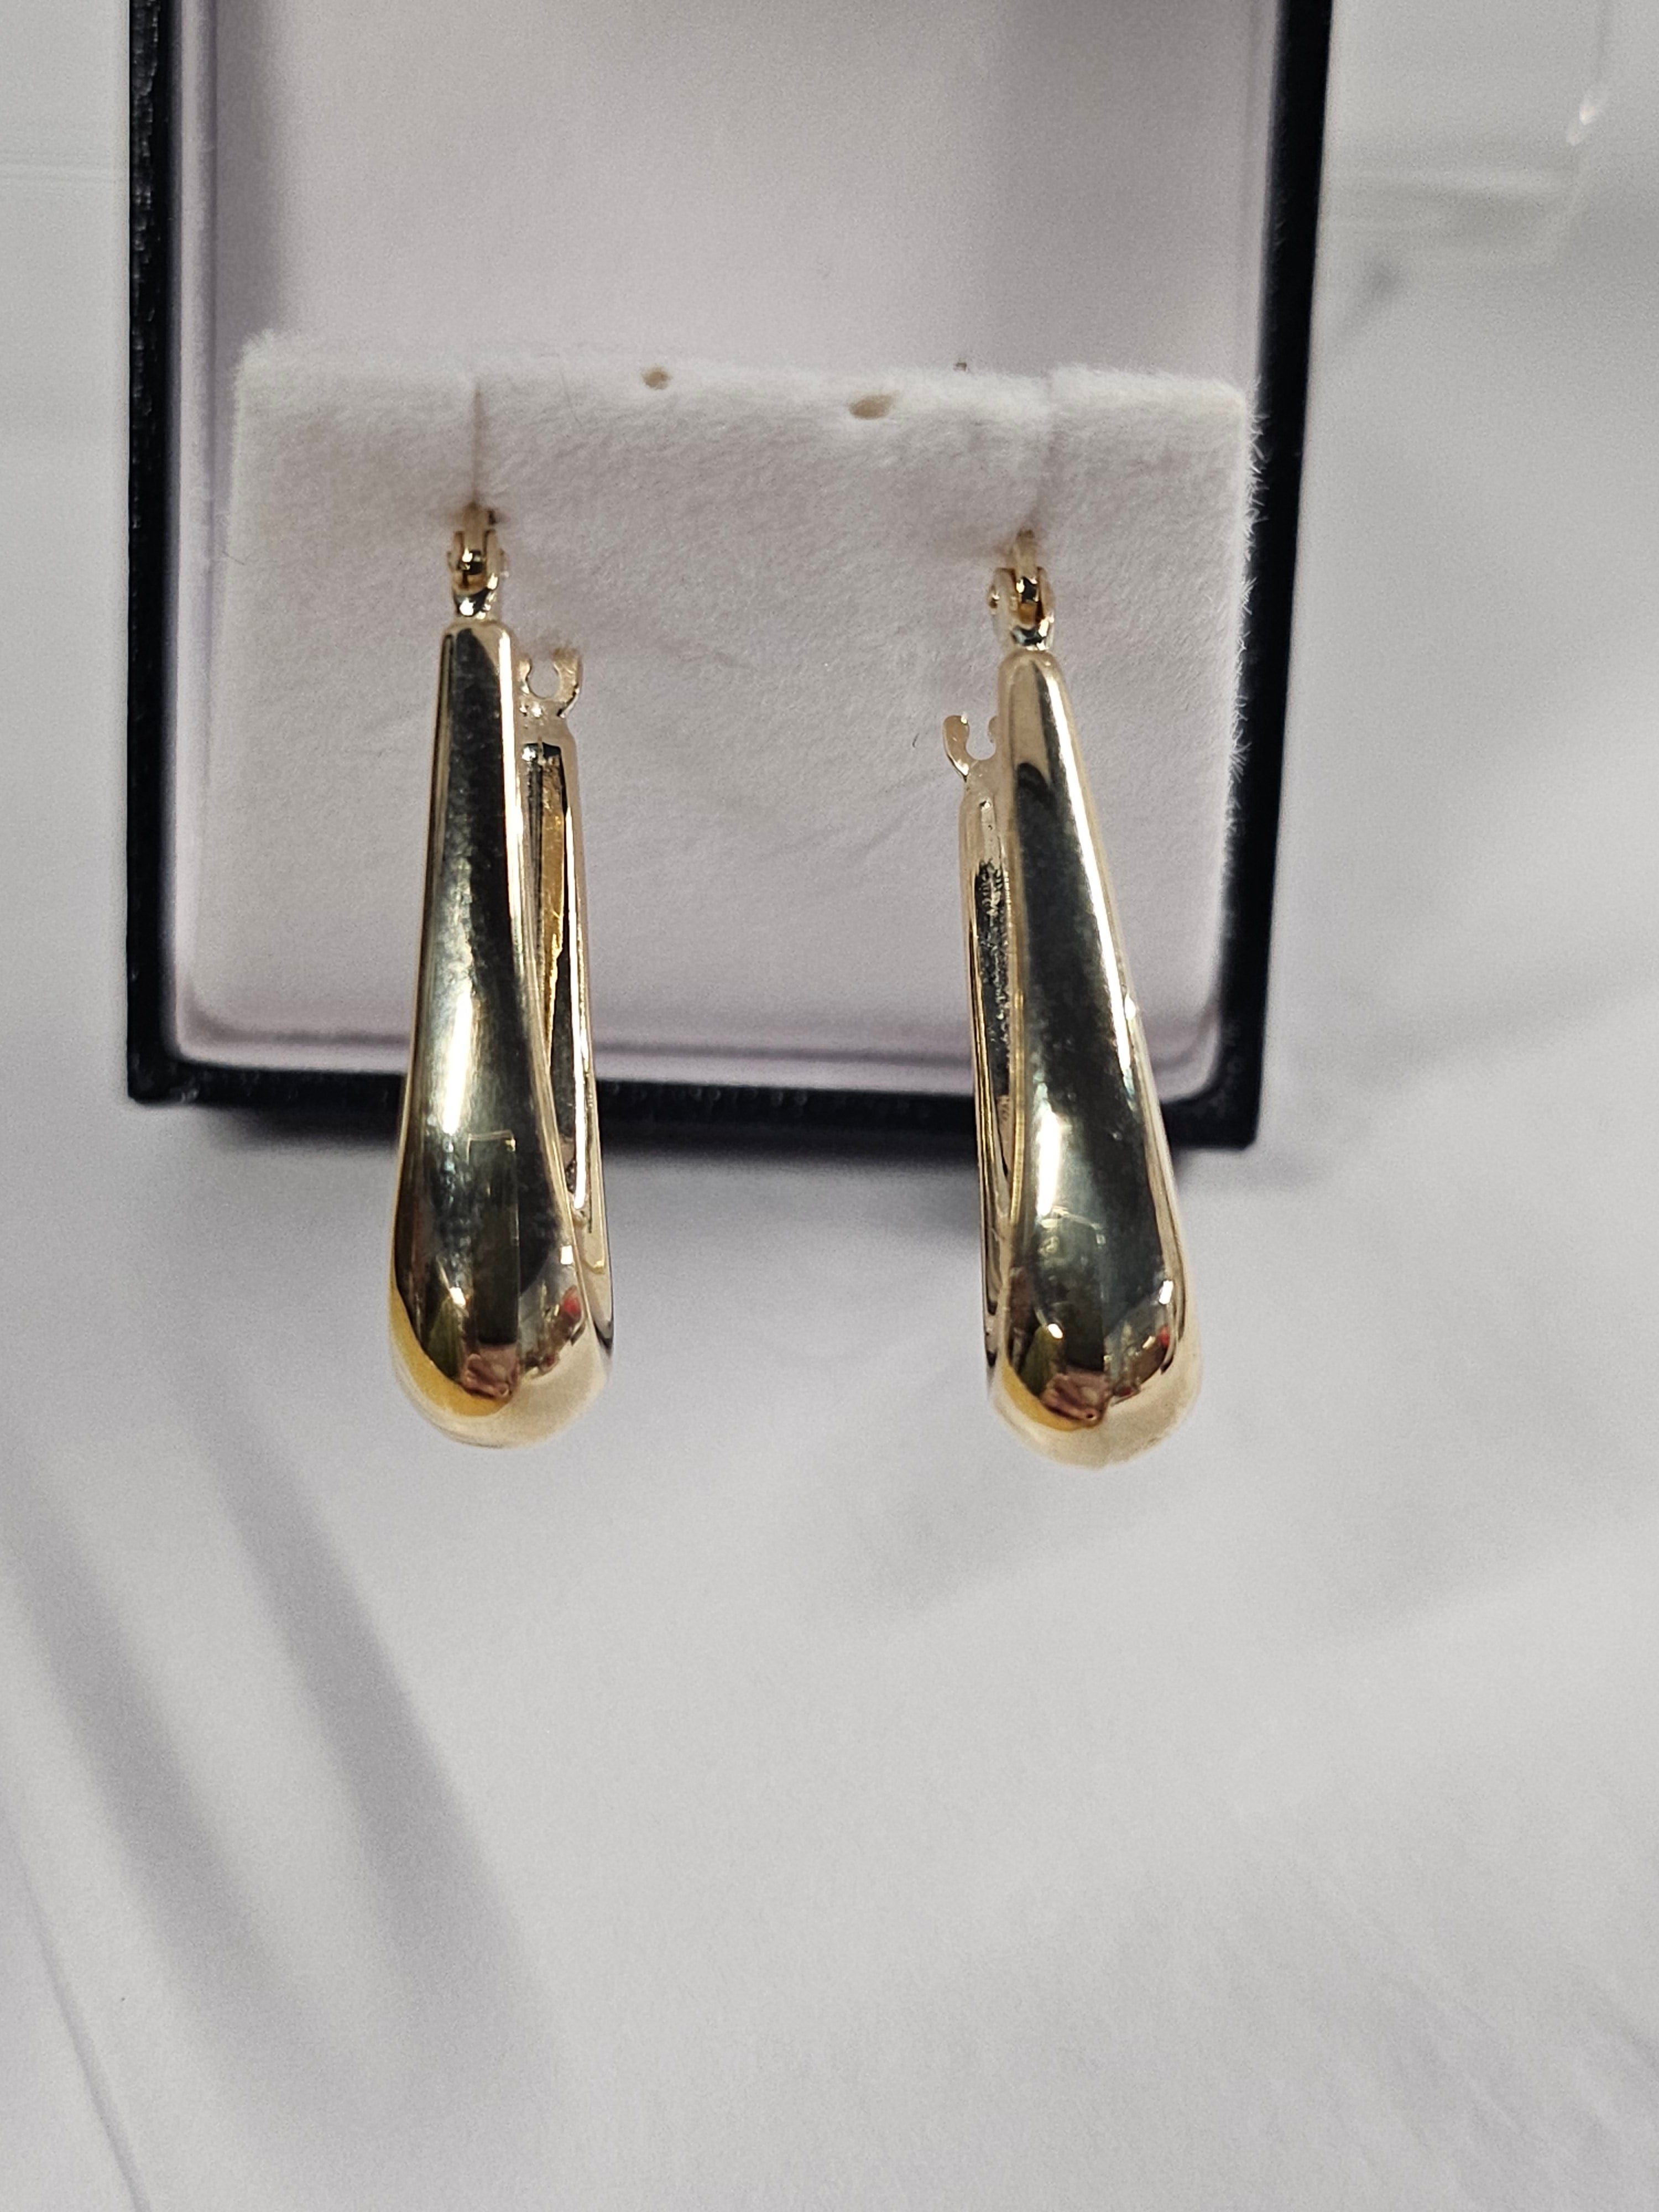 Gold Hoop Earrings - Elongated - 11x25mm - 304